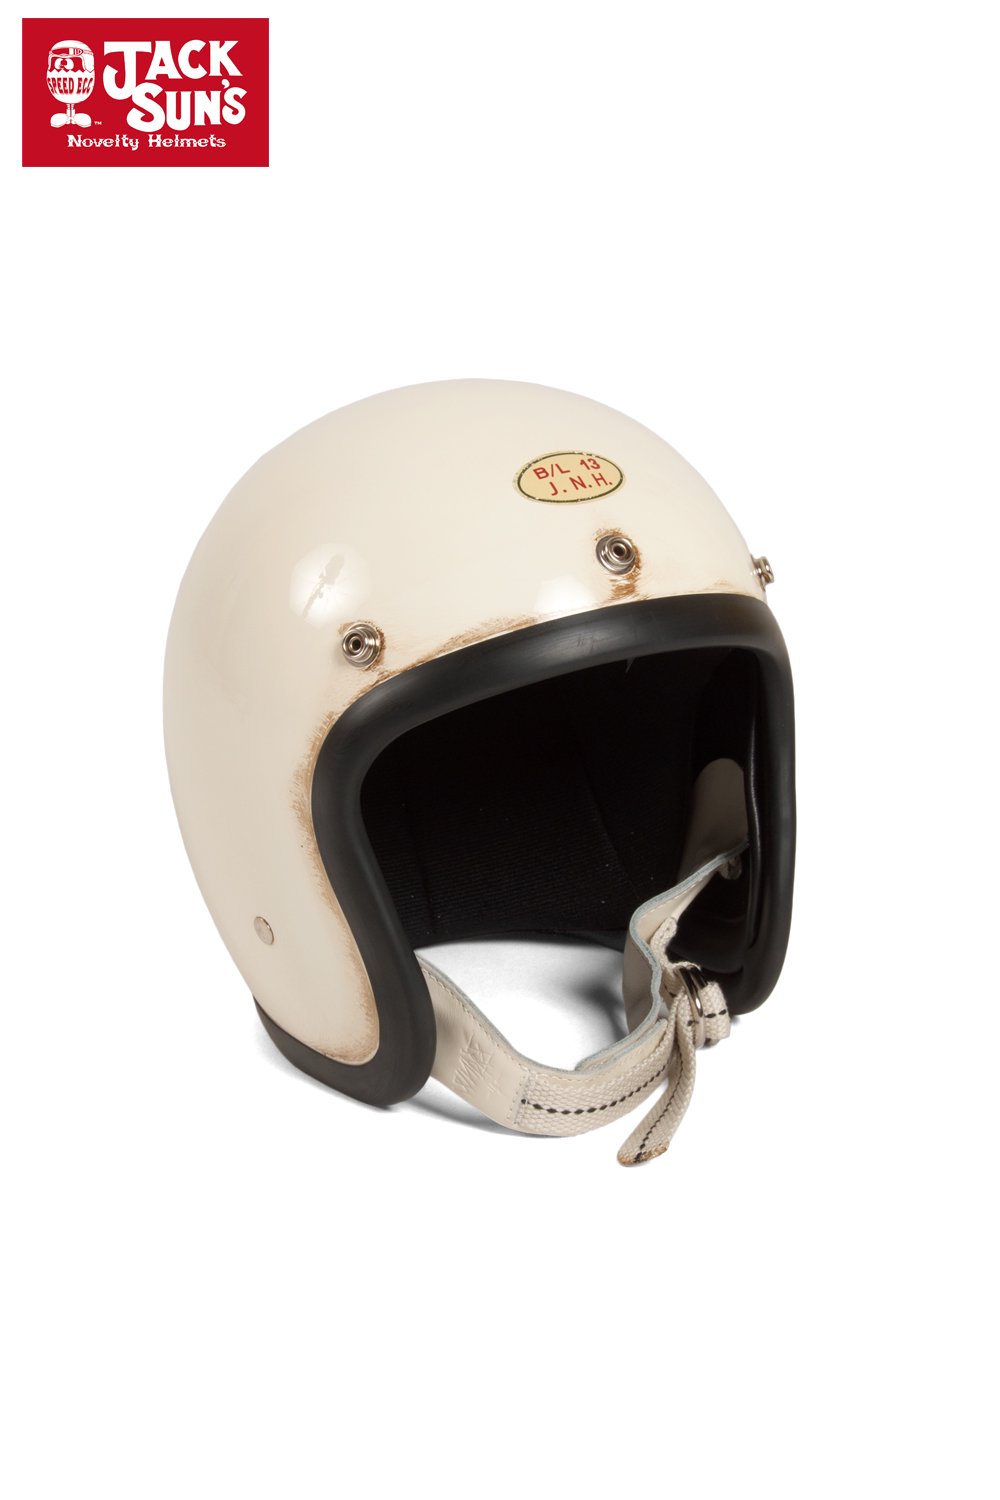 JACKSUN'S(ジャックサンズ) ヘルメット LIMITED 500TX 